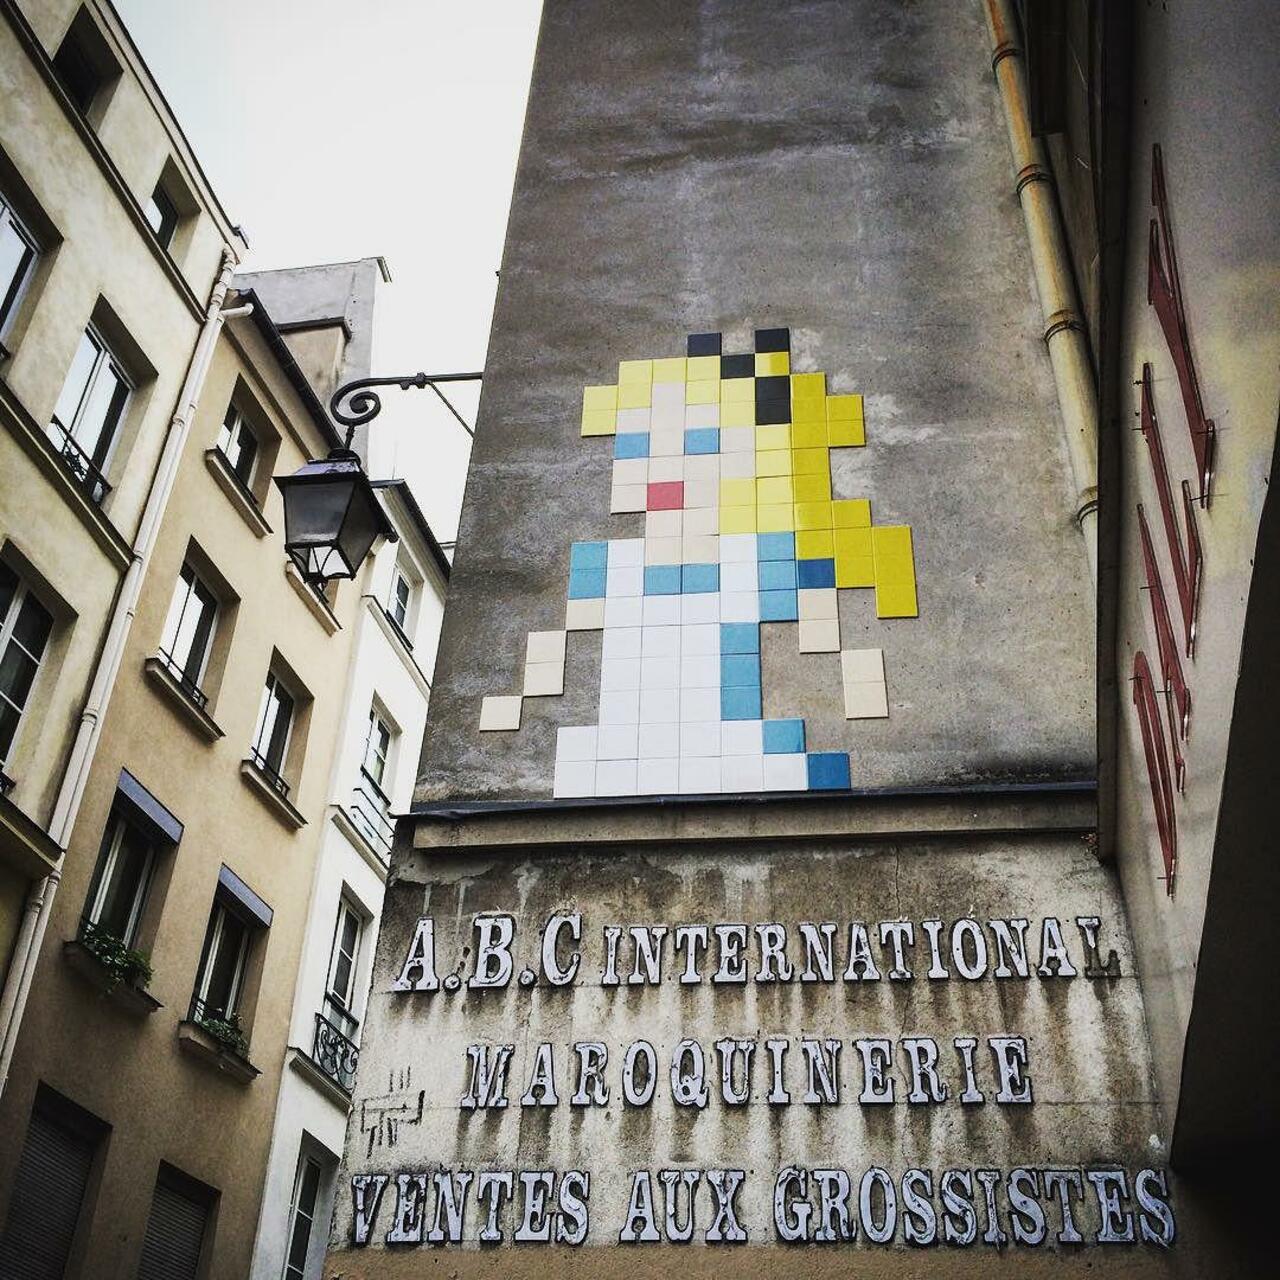 ywoono1: RT RelaxInParis: circumjacent_fr: #Paris #graffiti photo by vintage26 http://ift.tt/1RPVde1 #StreetArt http://t.co/XmIebadZOi